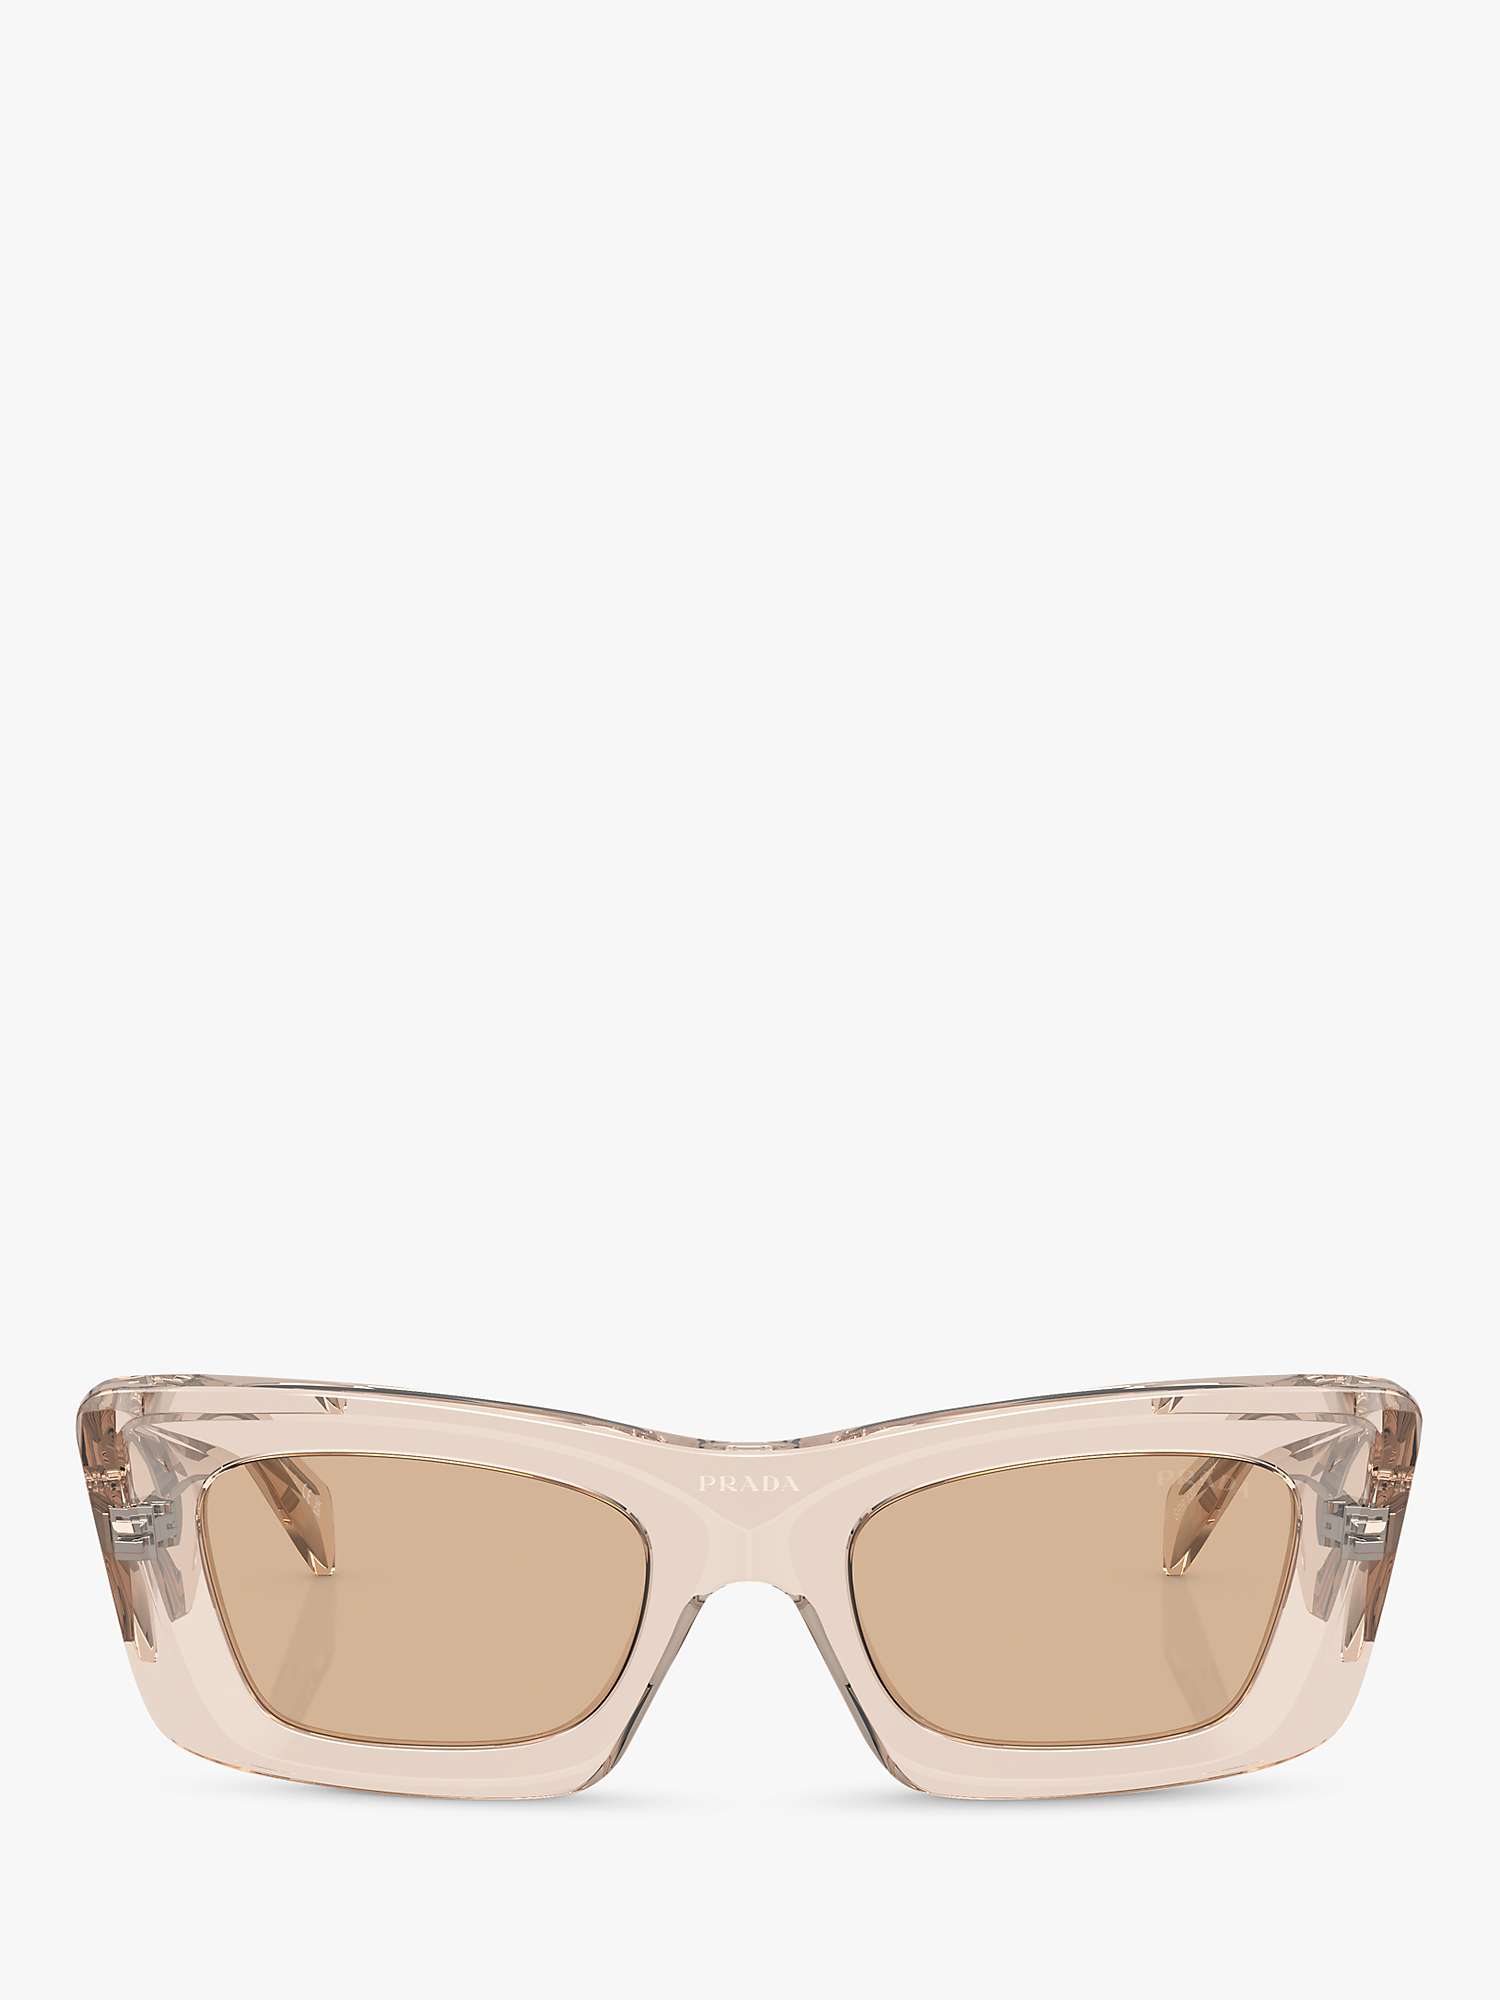 Buy Prada PR 13ZS Women's Cat's Eye Sunglasses, Crystal Beige/Brown Online at johnlewis.com